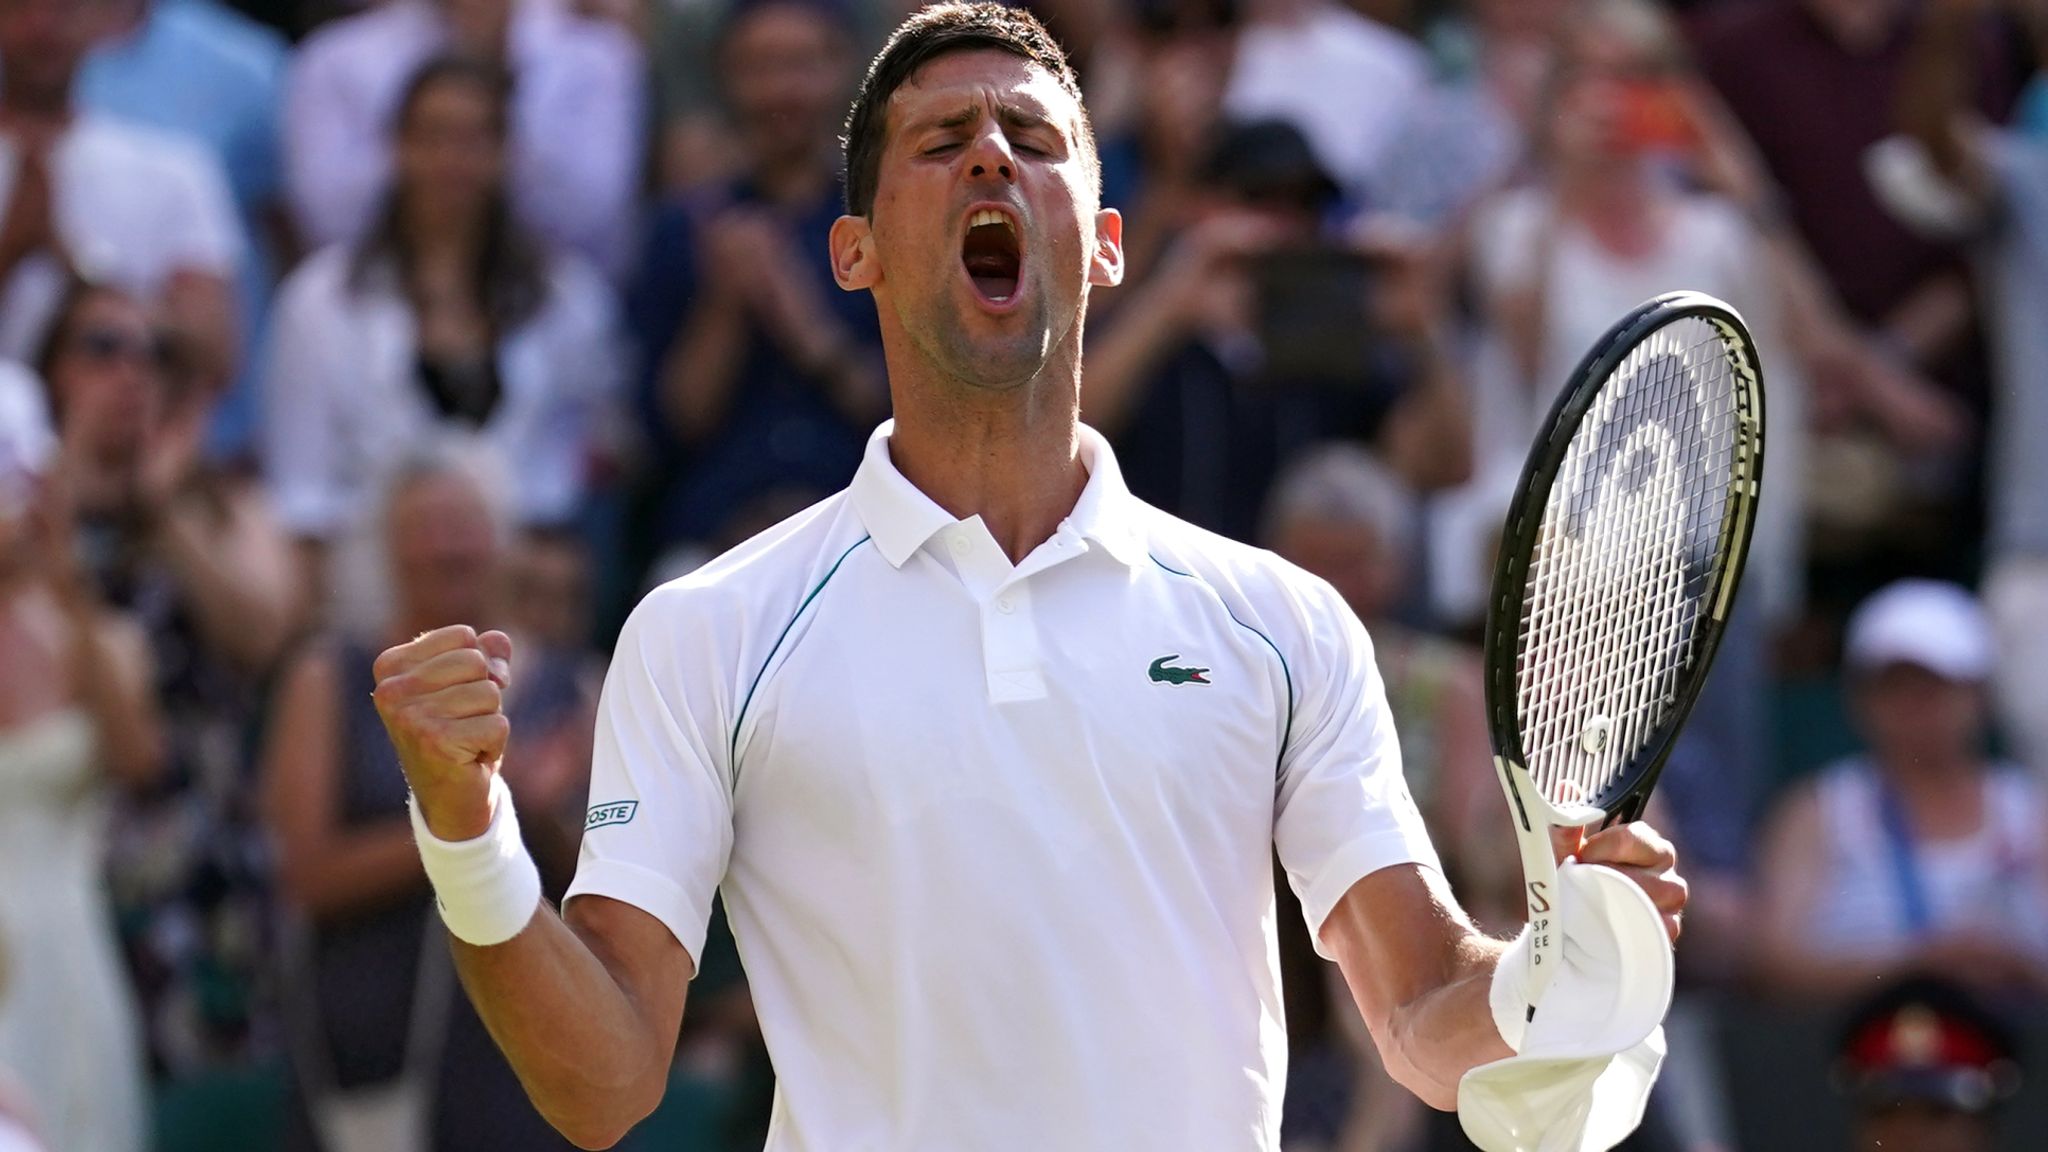 Wimbledon Novak Djokovic ends the hopes of Cameron Norrie to reach final against Nick Kyrgios Tennis News Sky Sports